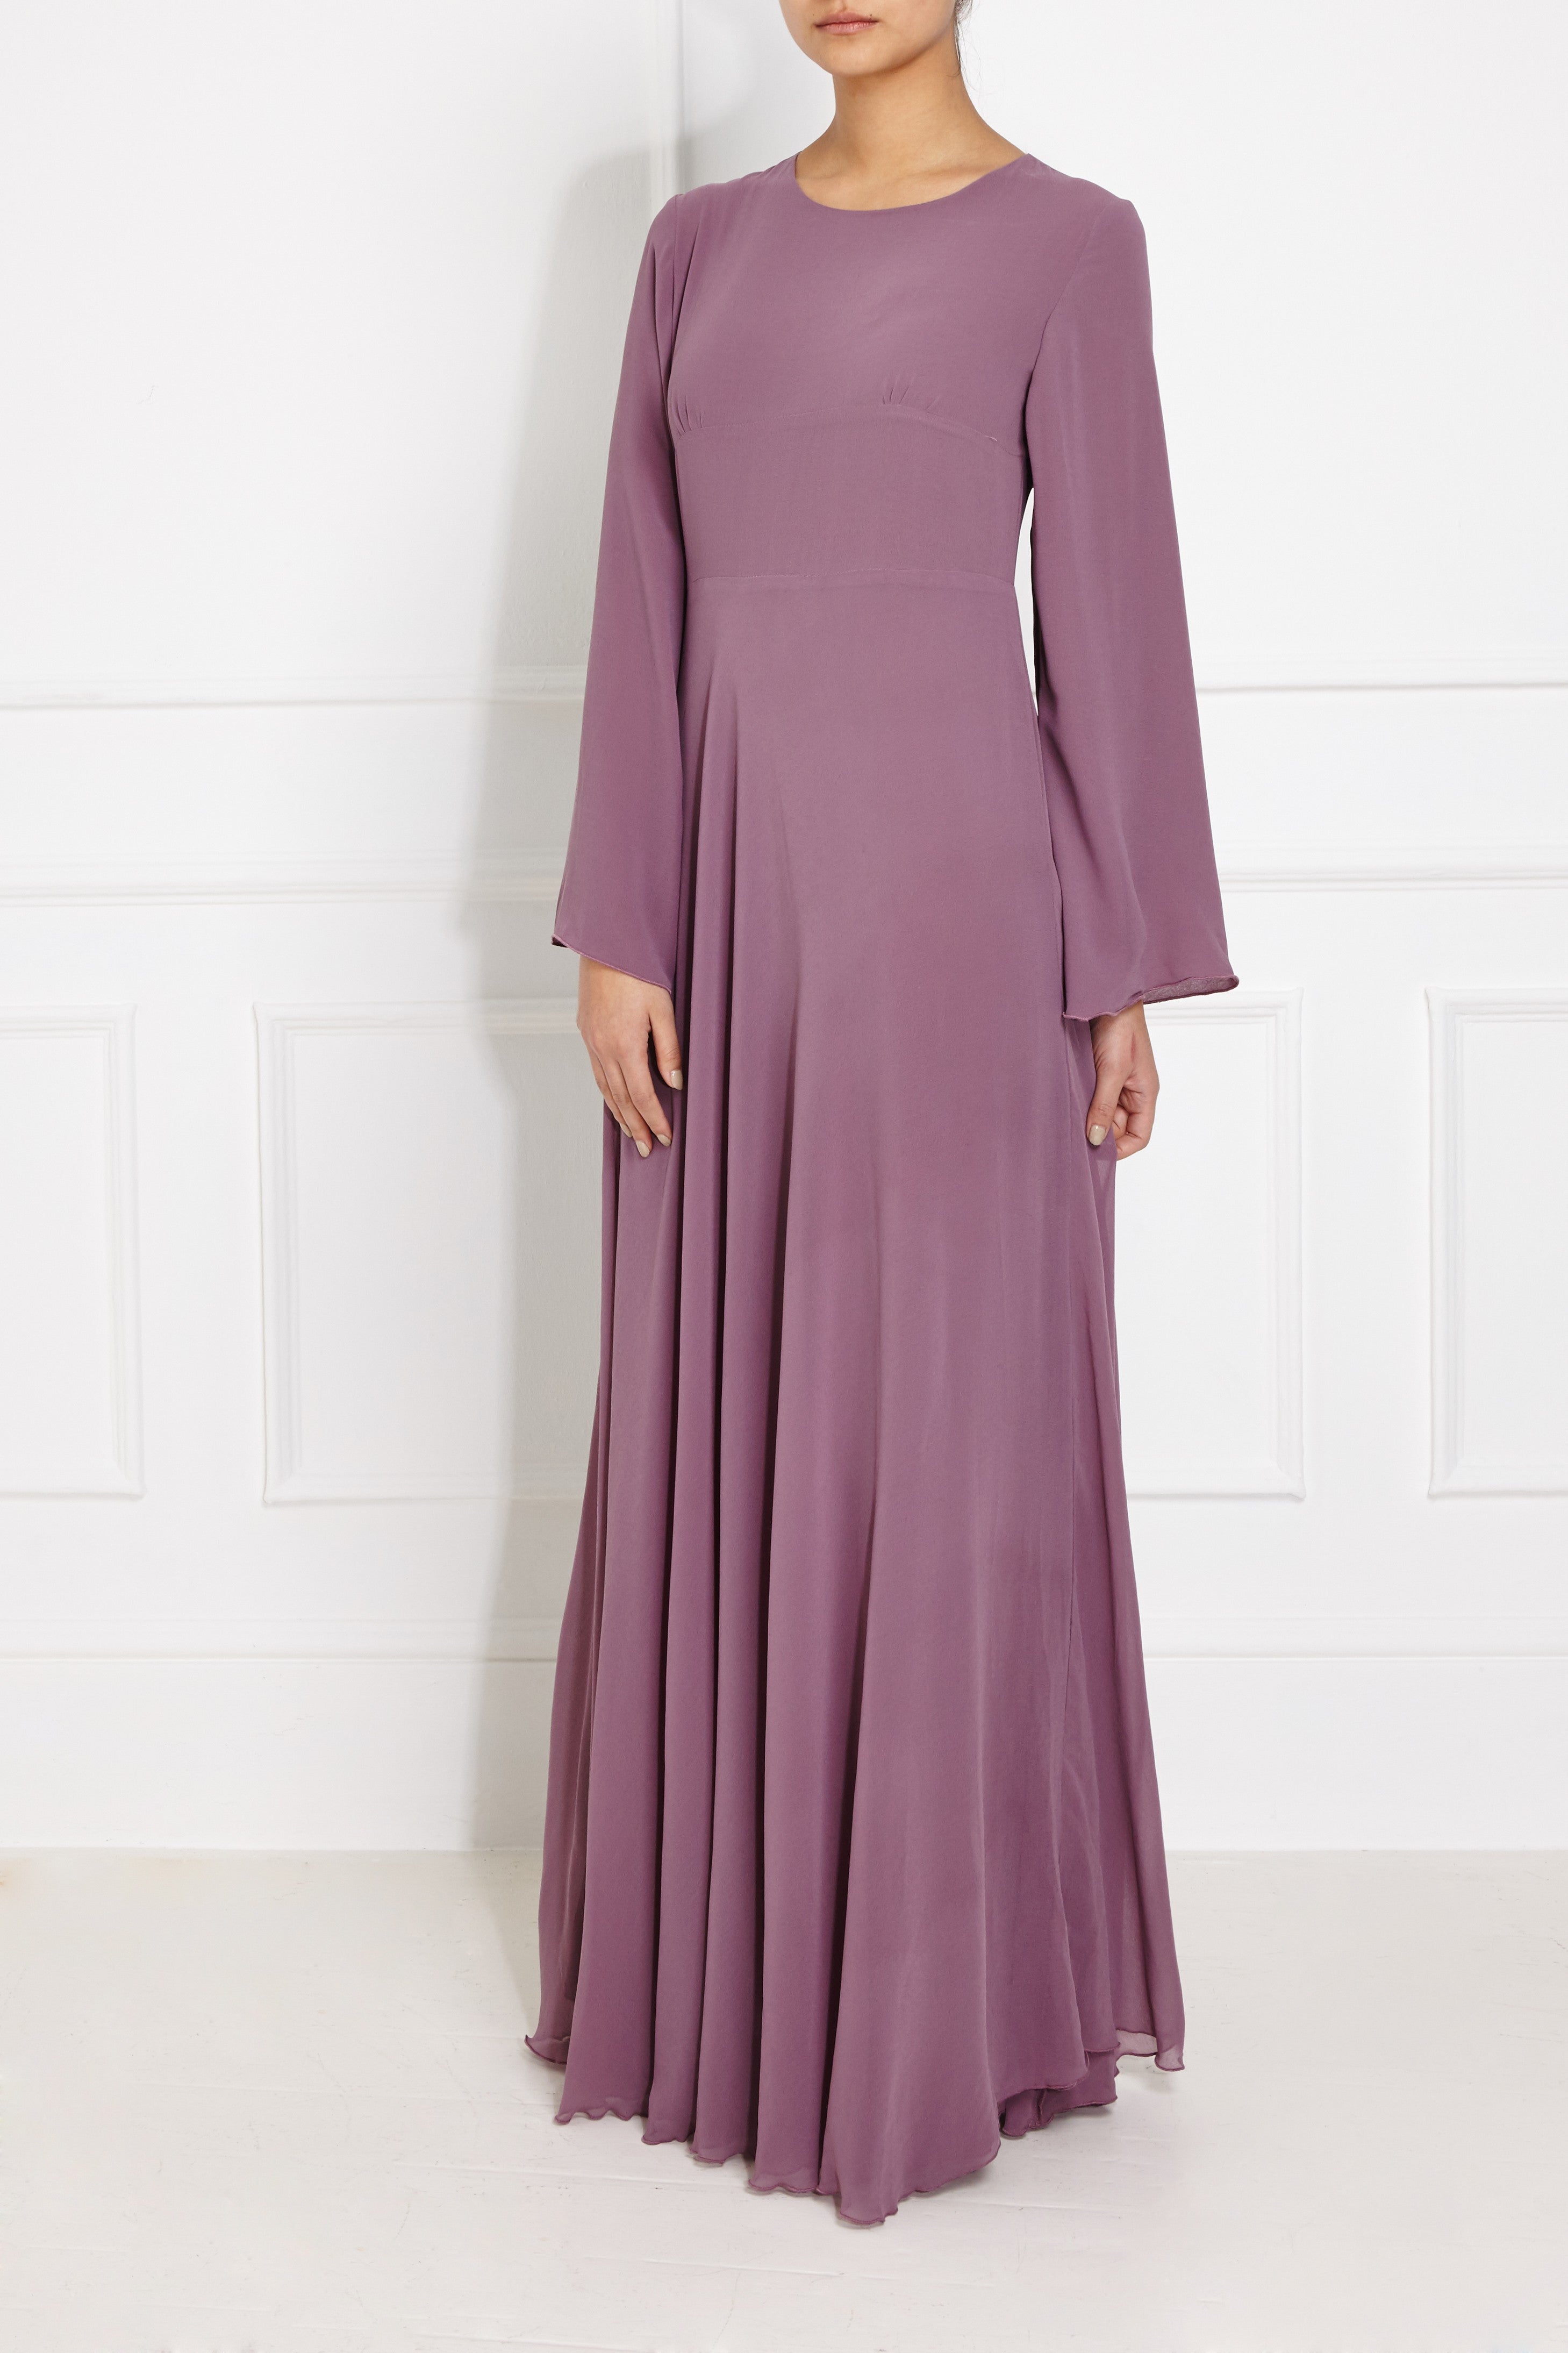 Lavender Chiffon Gown